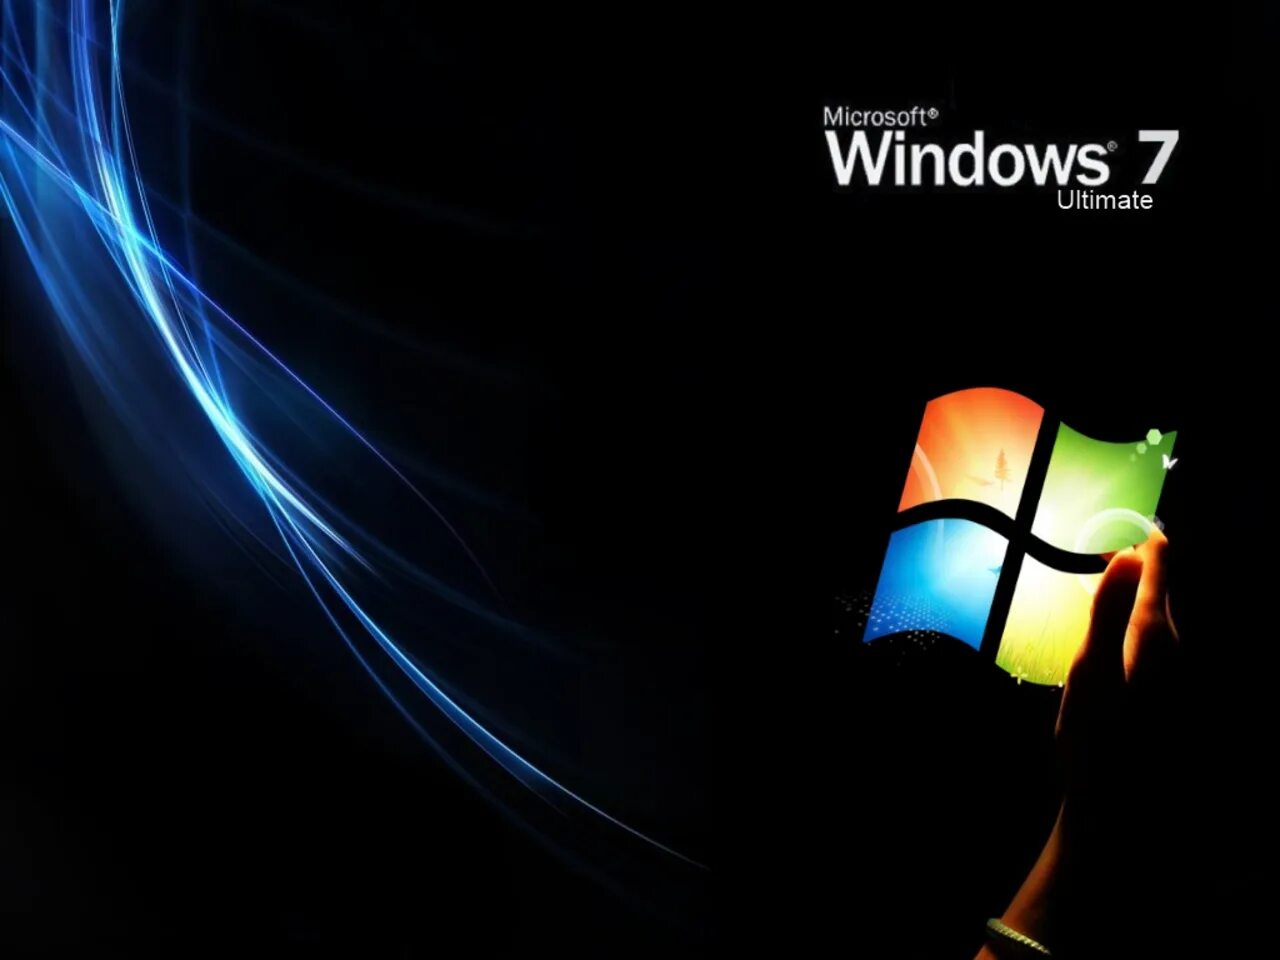 Windows 7 life. Виндовс 7. Обои Windows 7. Виндовс 7 ультиматум. Windows 7 максимальная Ultimate.